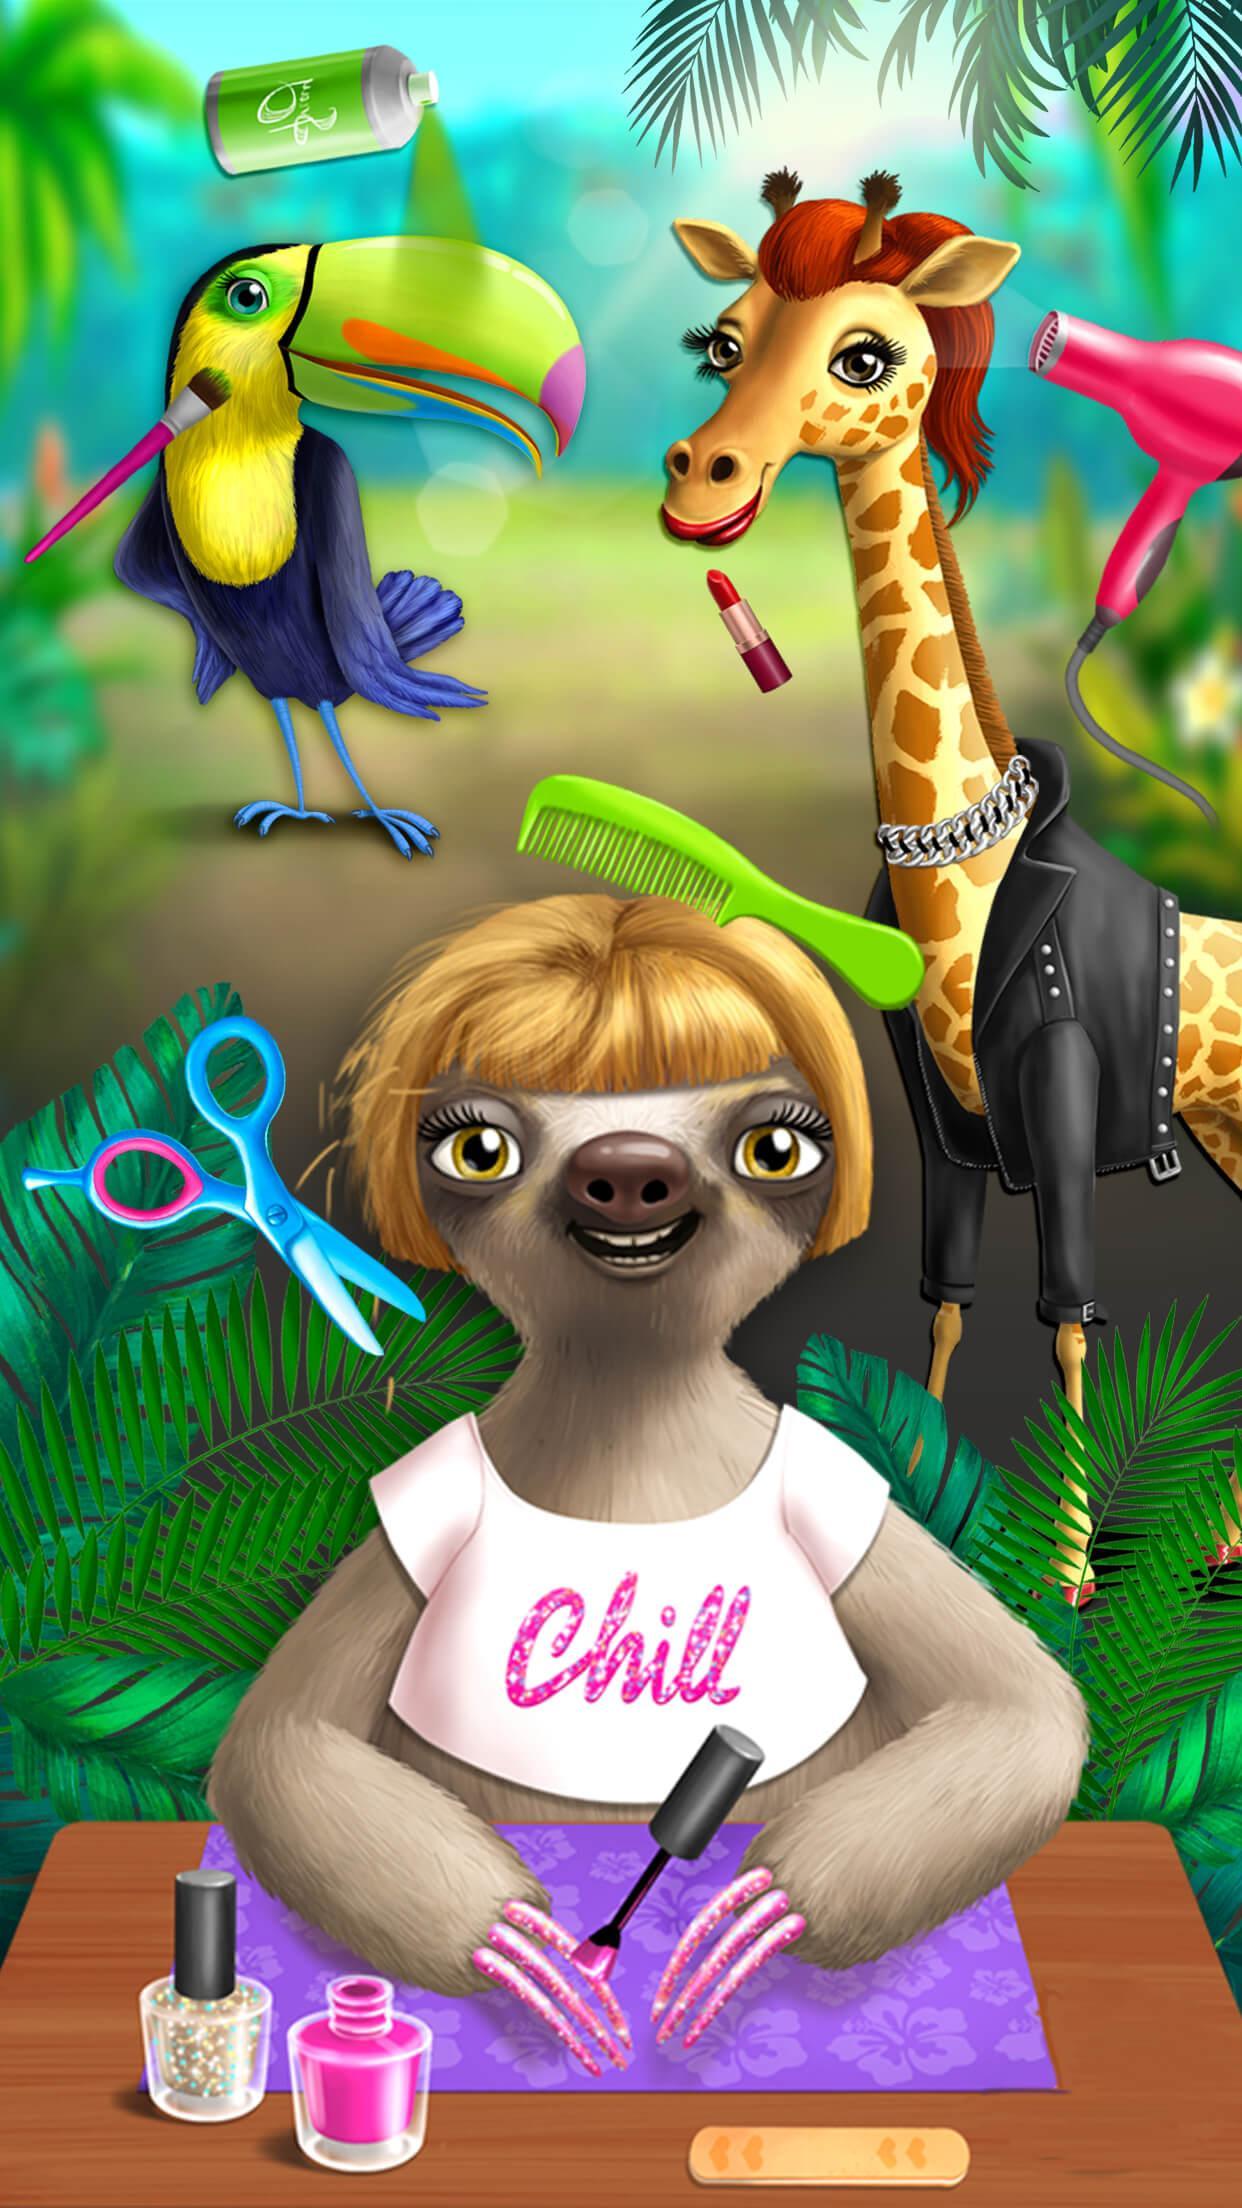 Jungle Animal Hair Salon - Styling Game for Kids 3.0.46 Screenshot 4